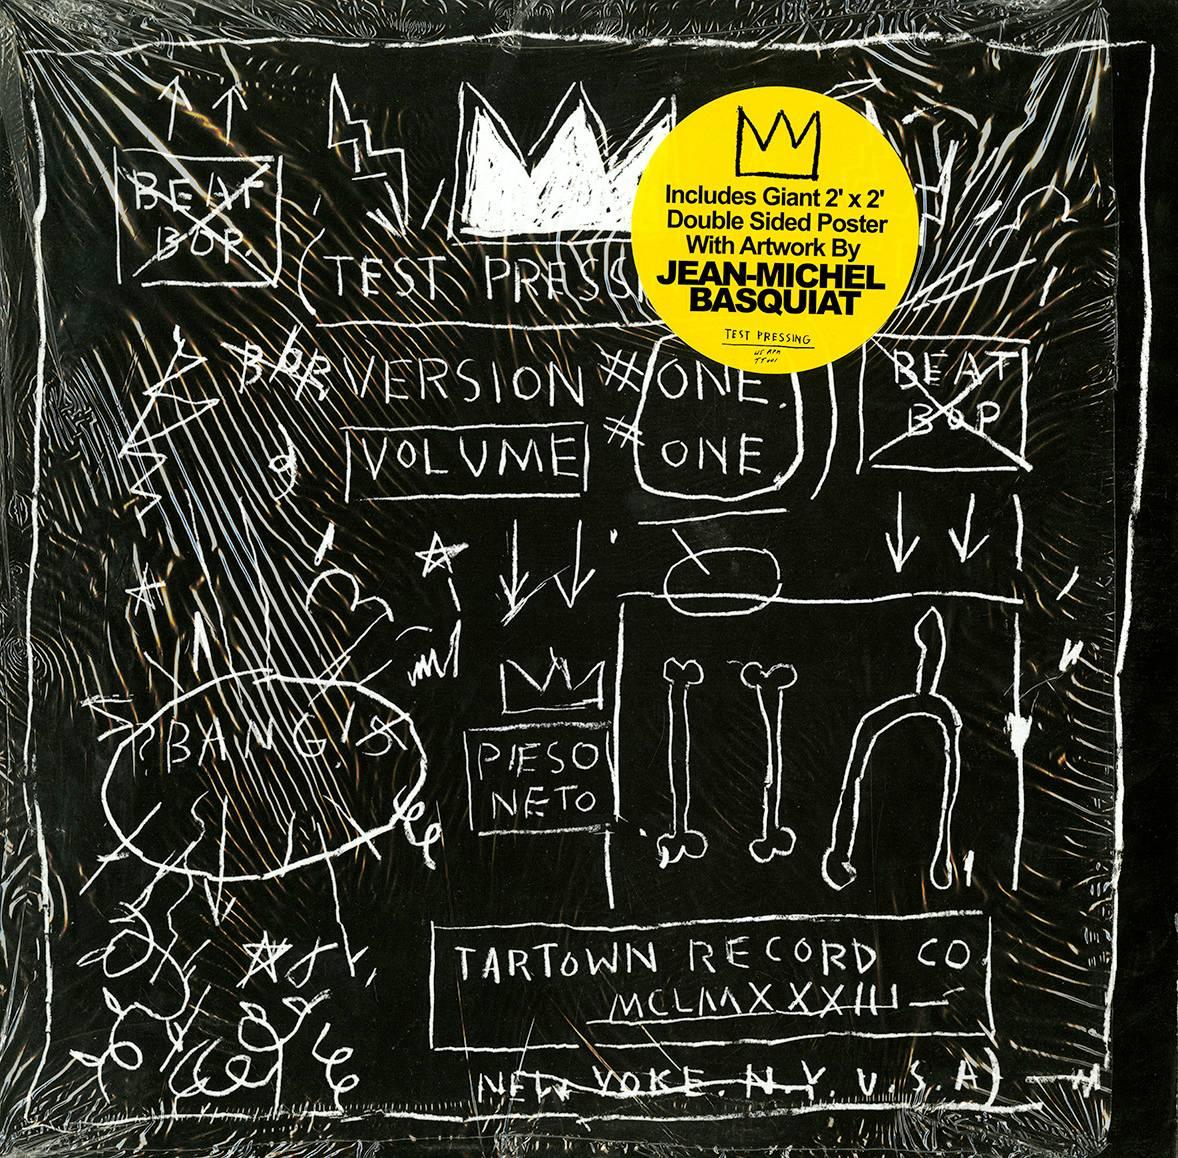 Basquiat Beatp Bop record art and poster 1983/2005 (Basquiat record art) - Art by Jean-Michel Basquiat